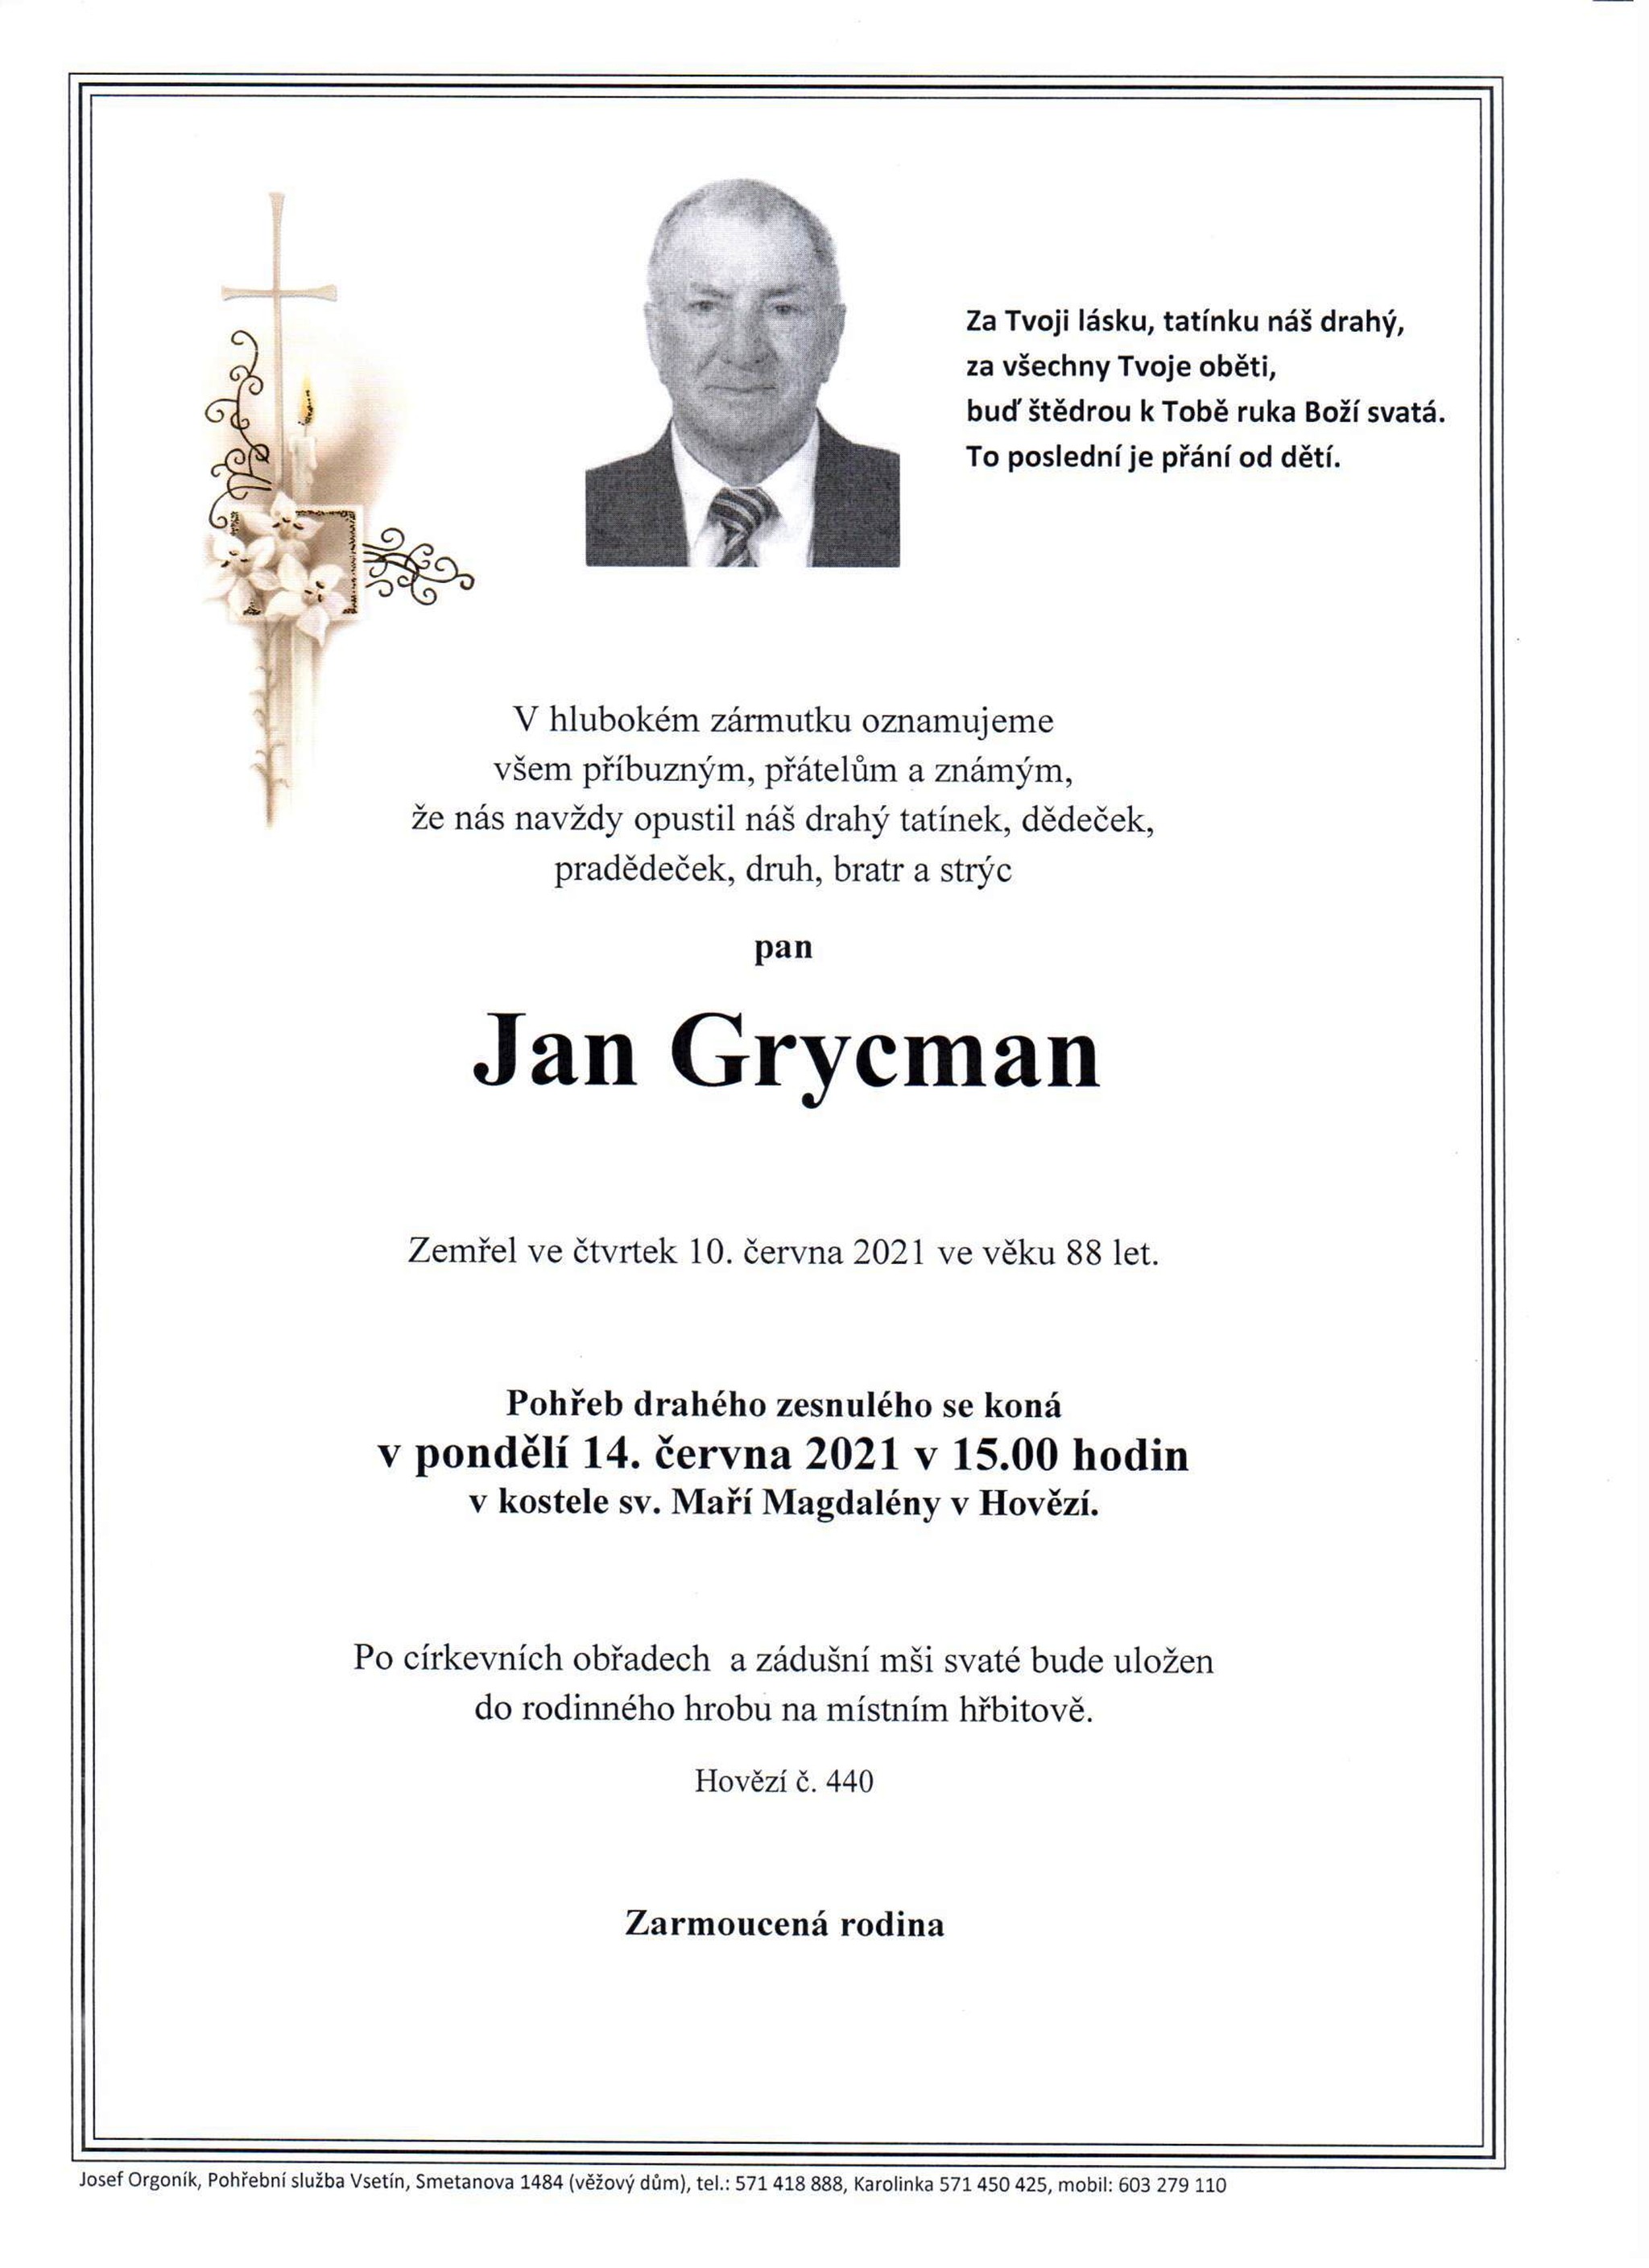 Jan Grycman